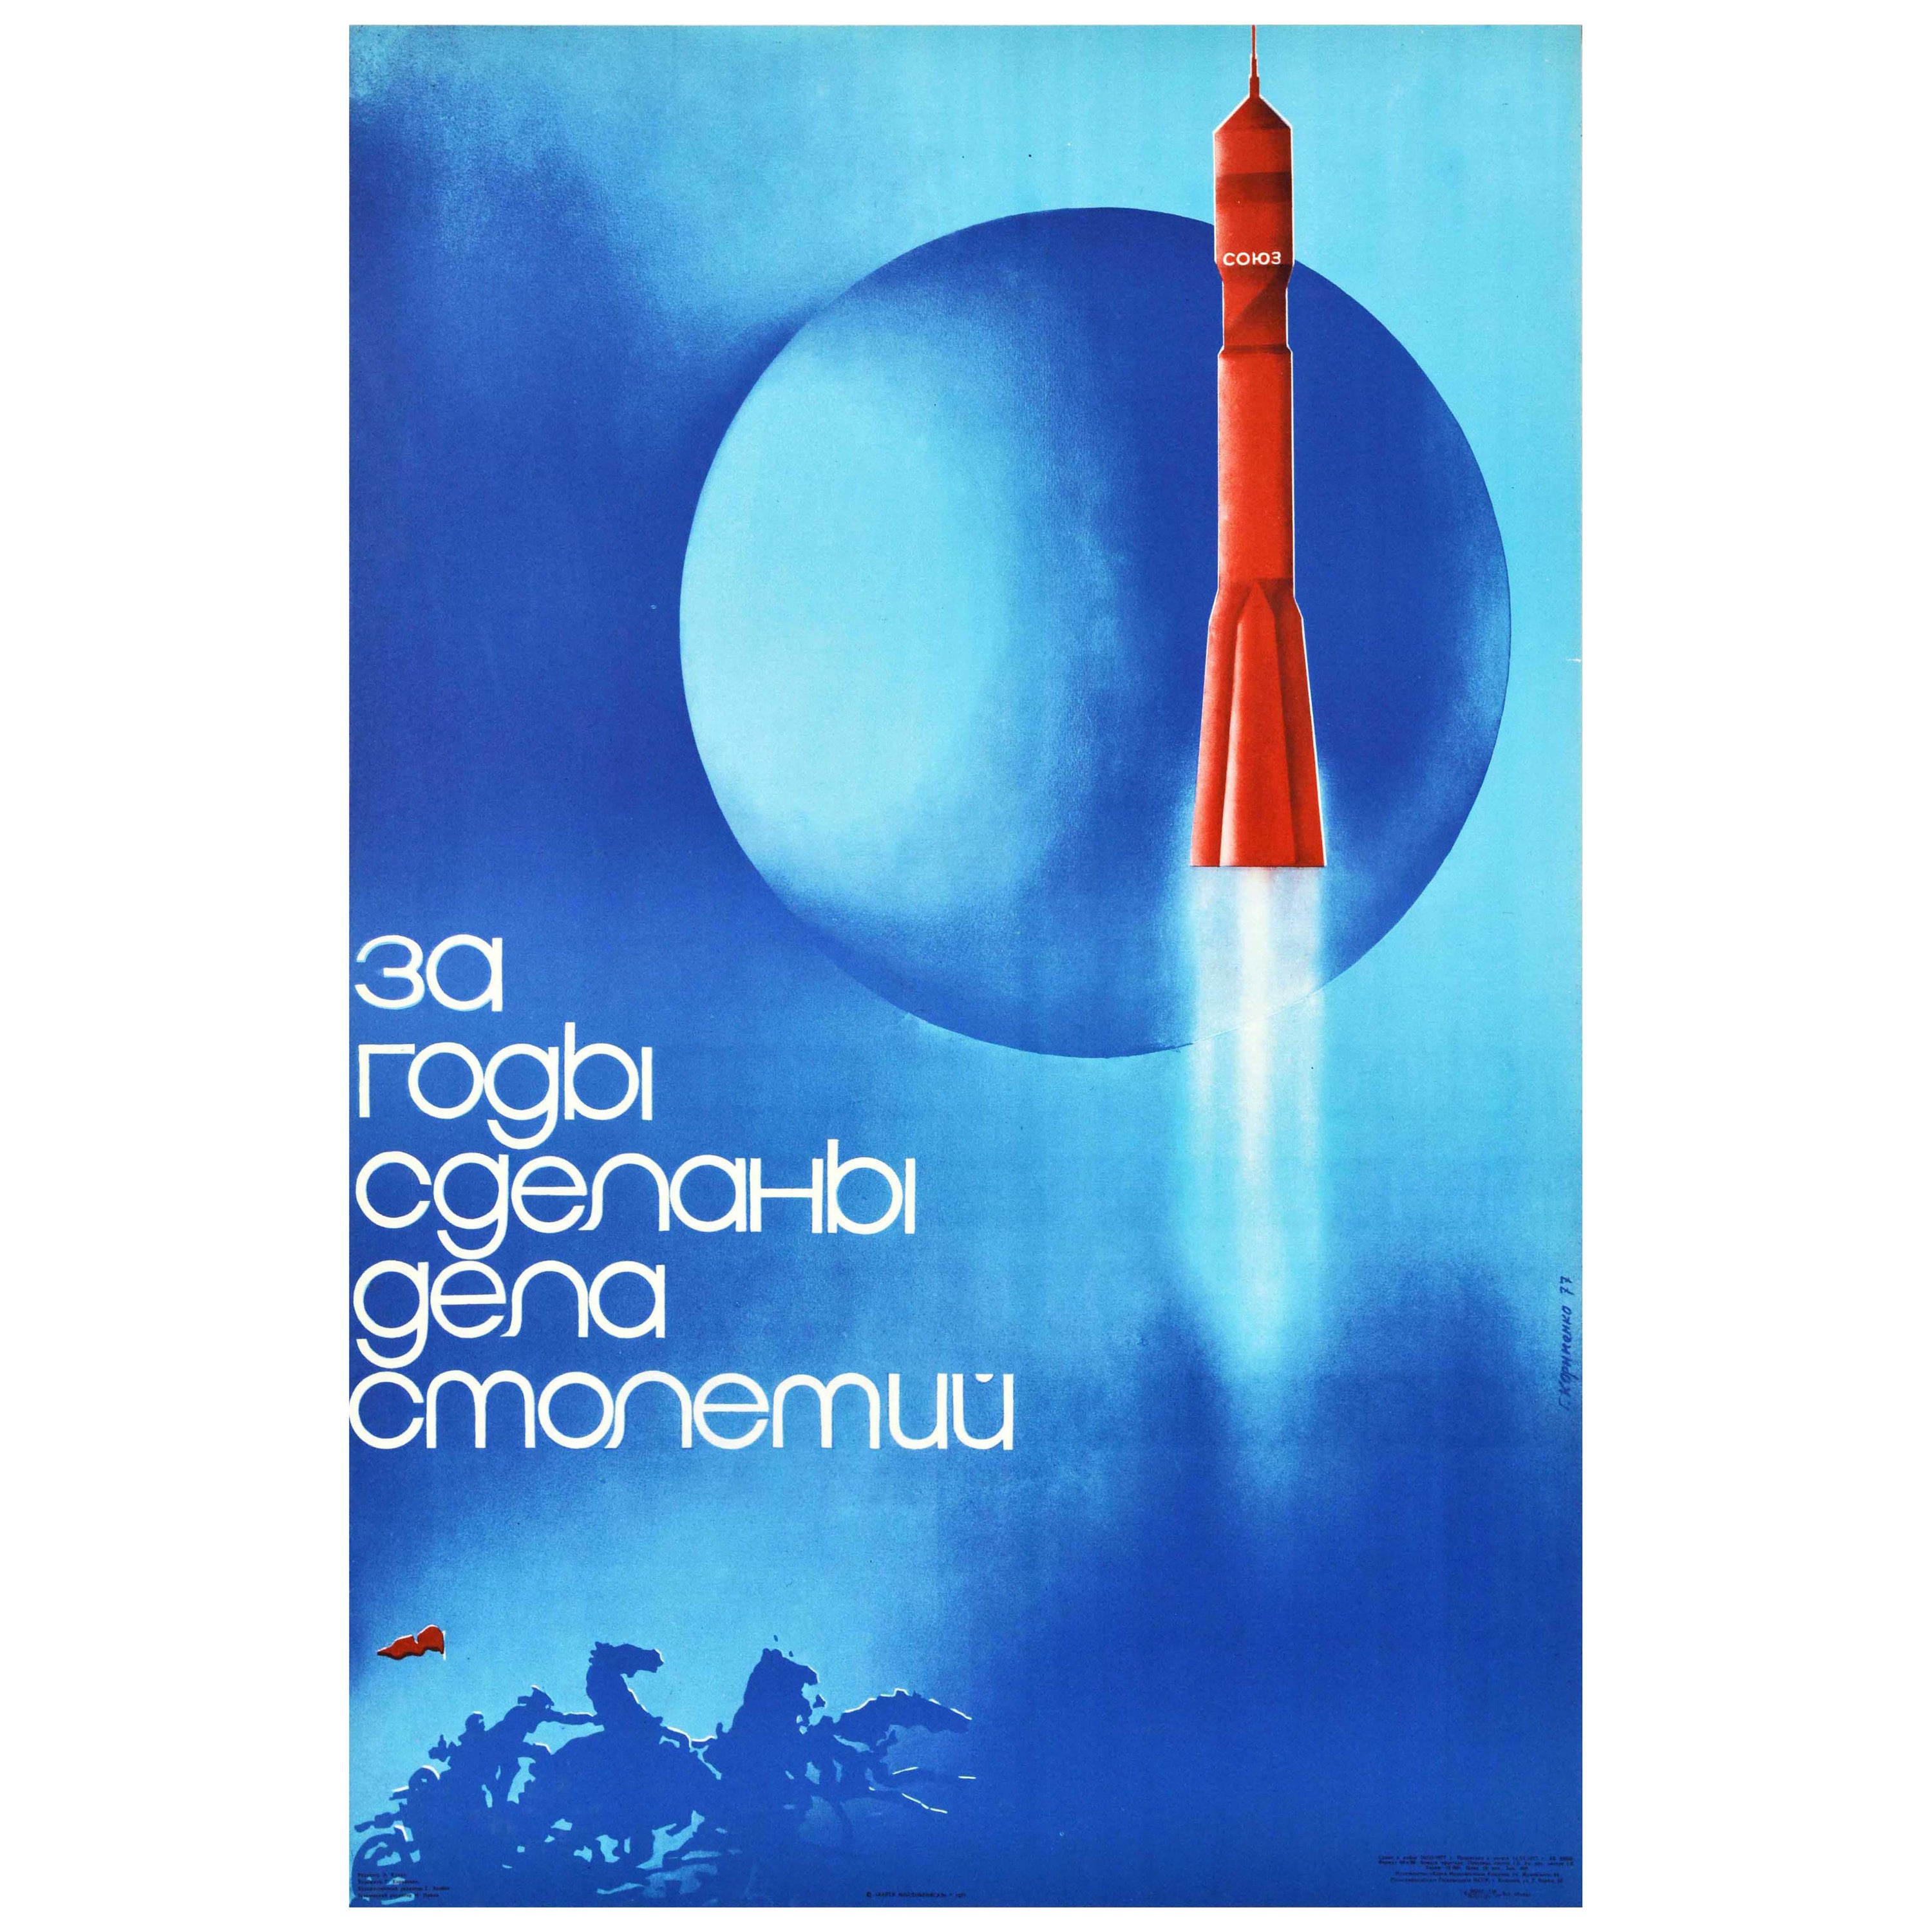 Original Vintage Soviet Space Achievements Rocket USSR Soyuz Astronaut Cosmonaut